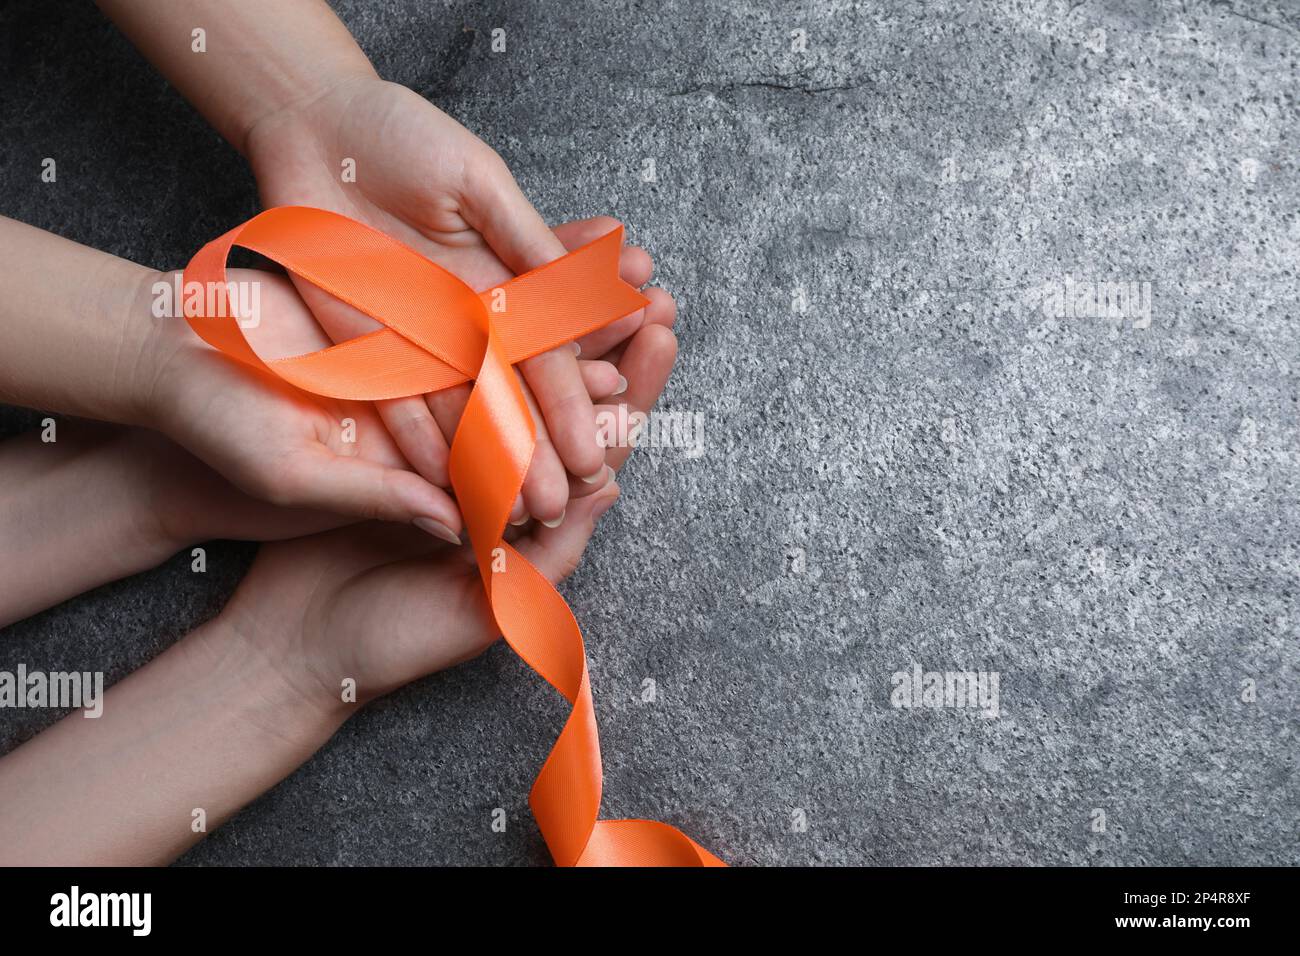 Orange ribbon leukemia awareness multiple sclerosis awareness